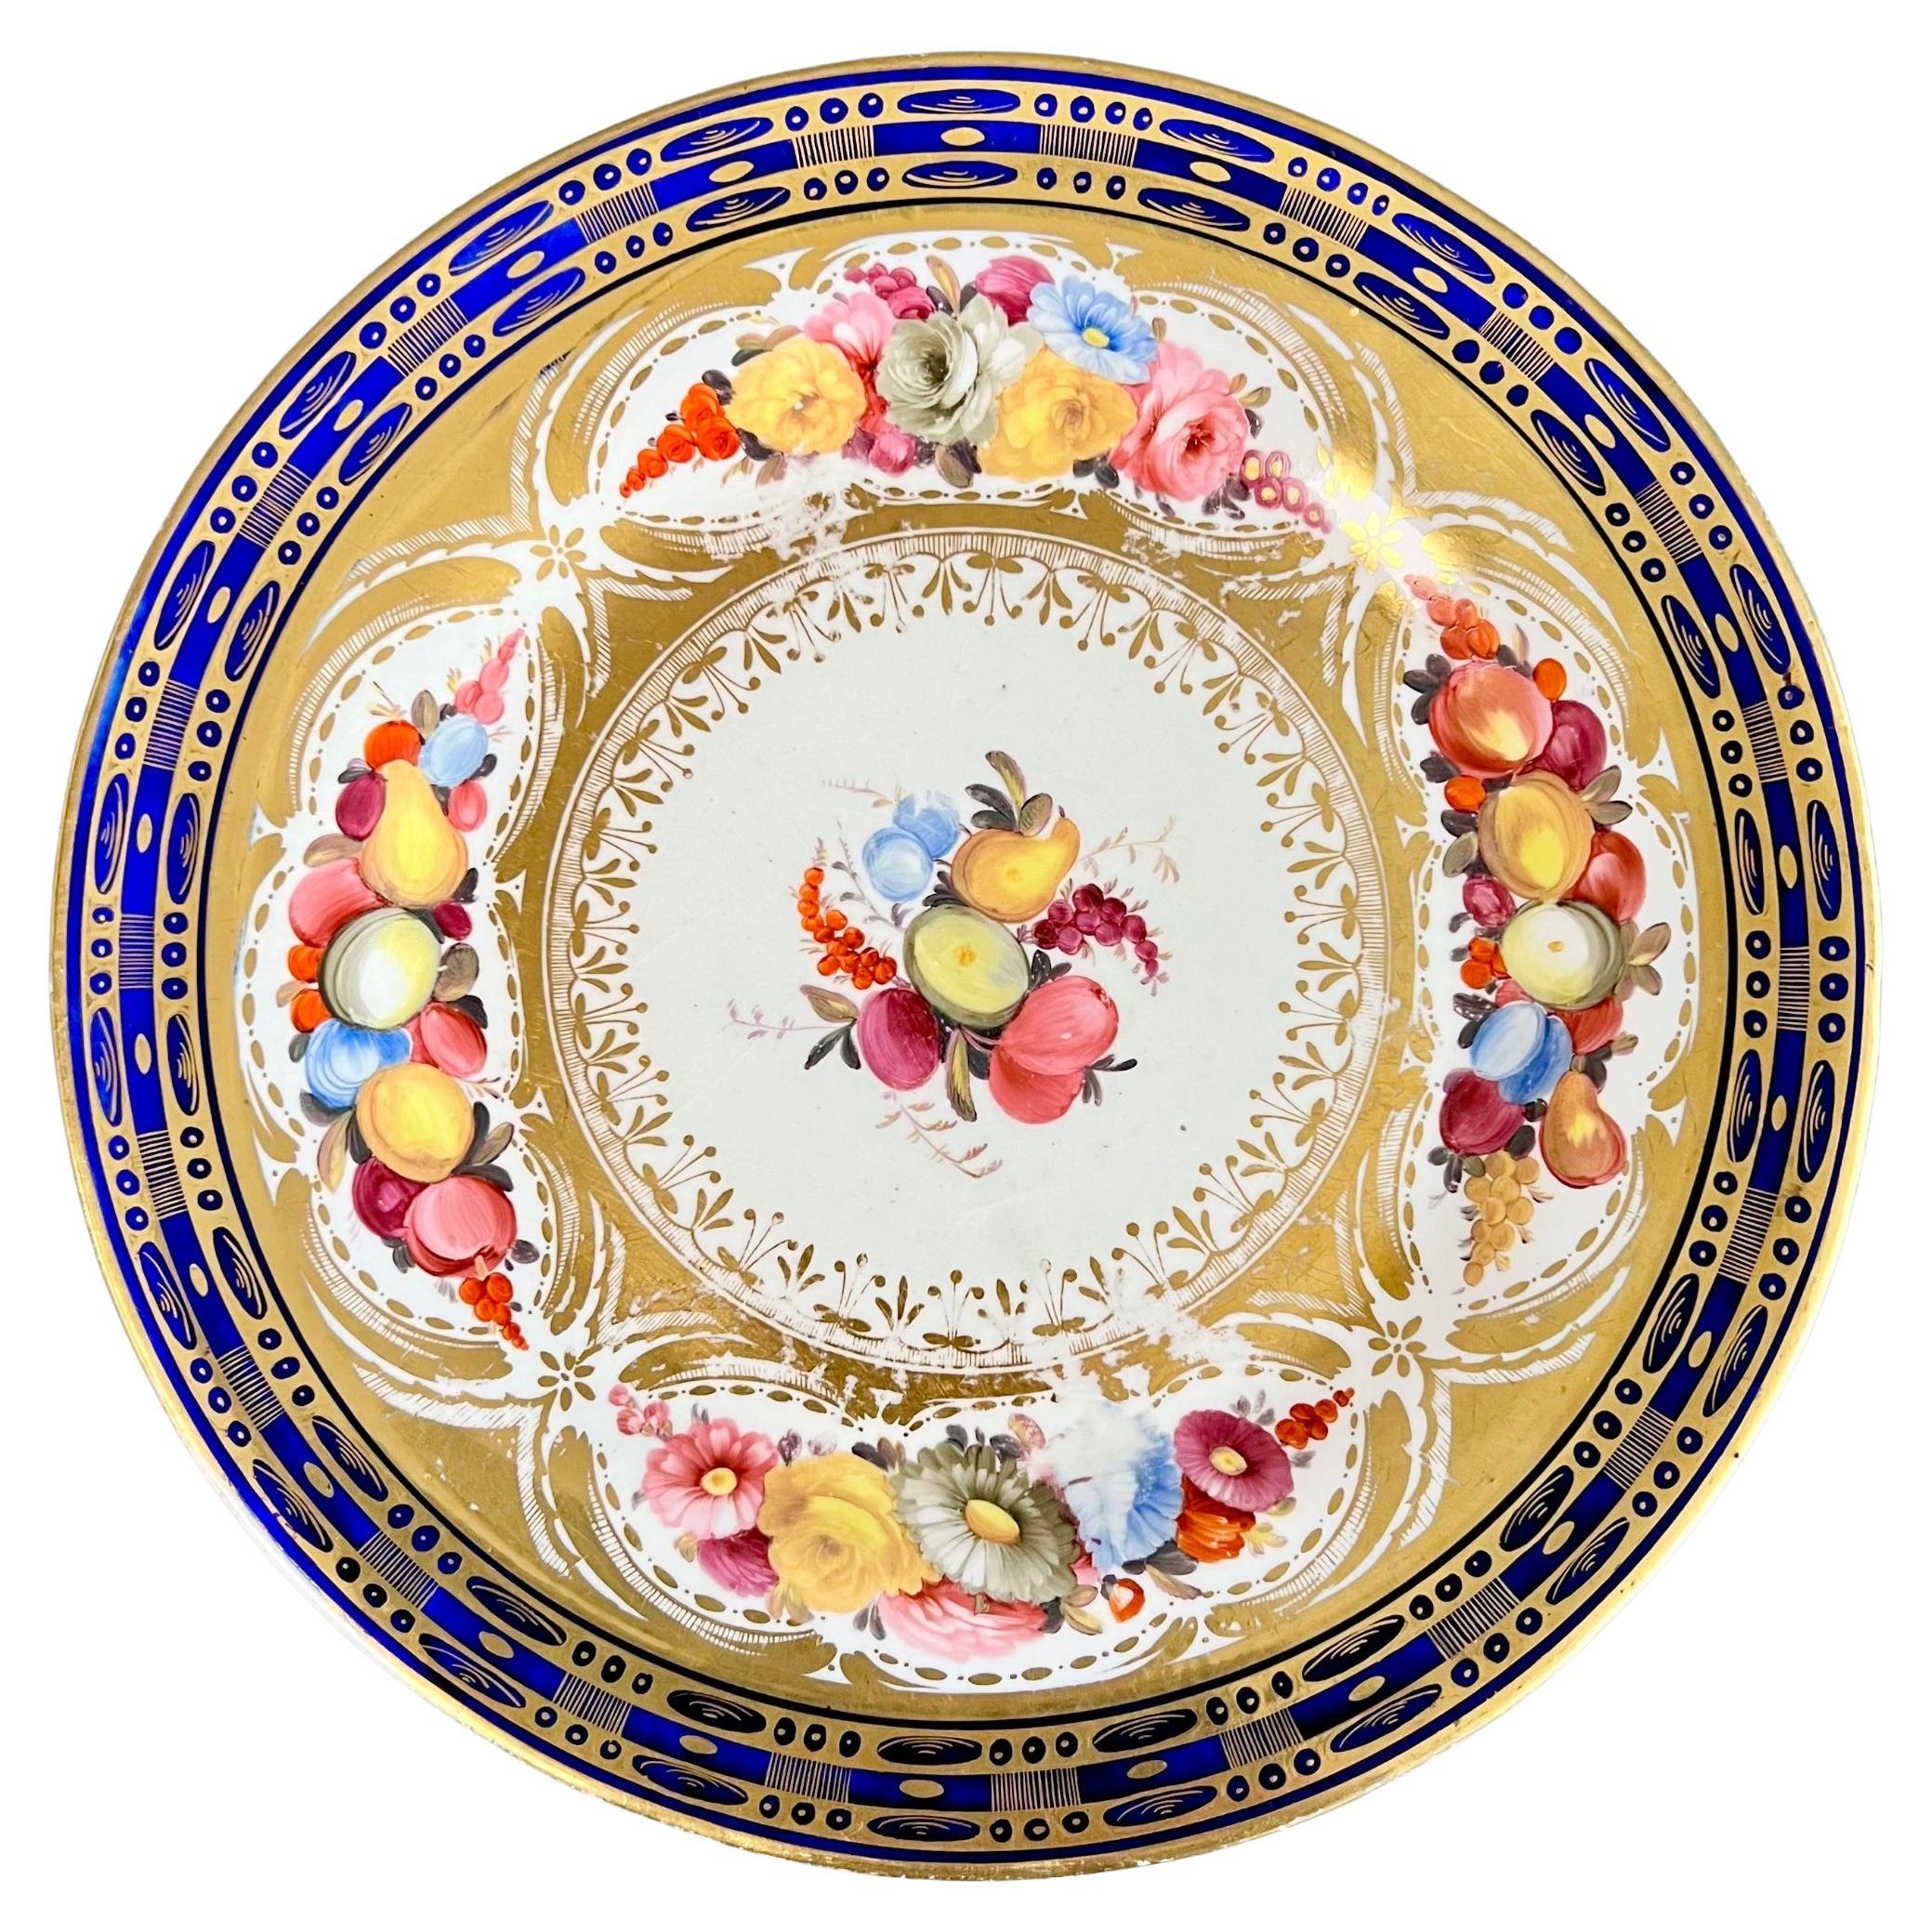 Assiette en porcelaine Coalport John Rose, bleu cobalt, dorée, fleurs et fruits, 1805-15